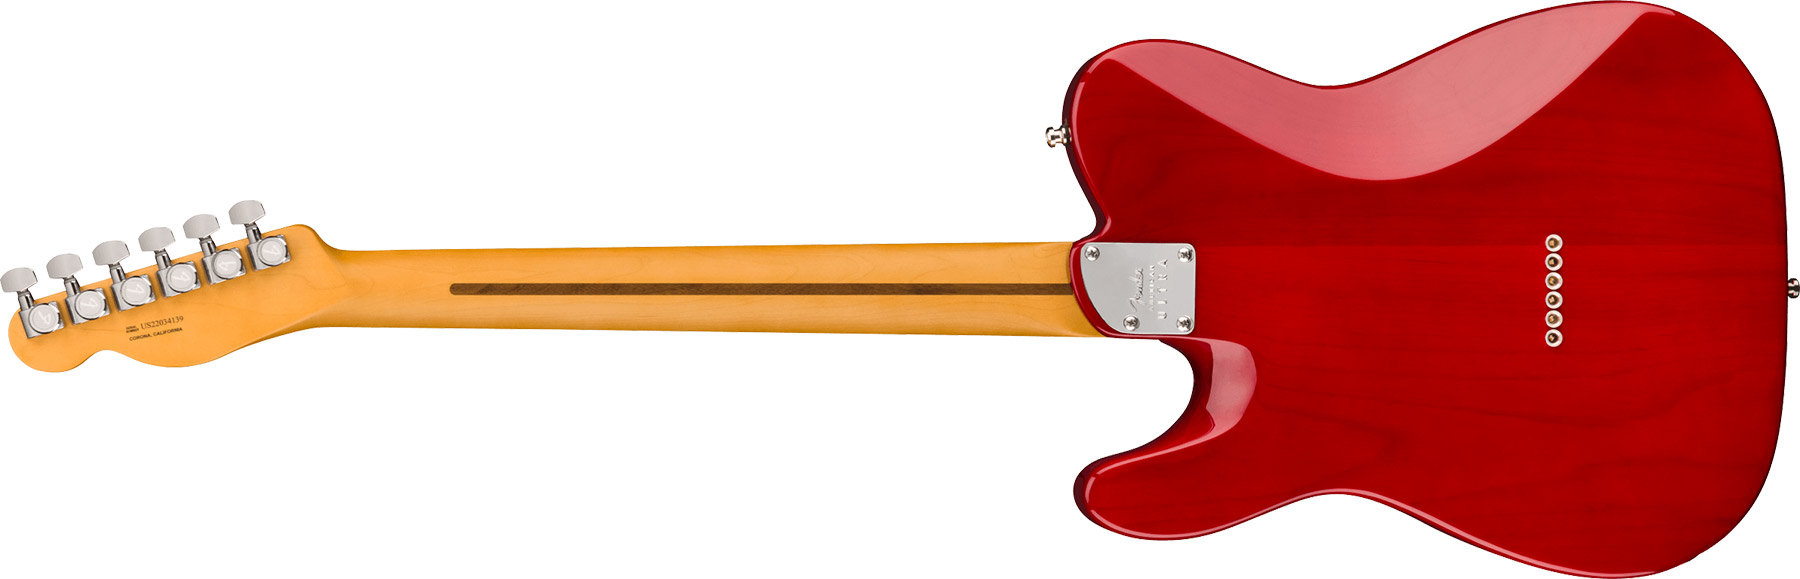 Fender Tele American Ultra Ltd Usa 2s Ht Eb - Umbra - Guitarra eléctrica con forma de tel - Variation 1